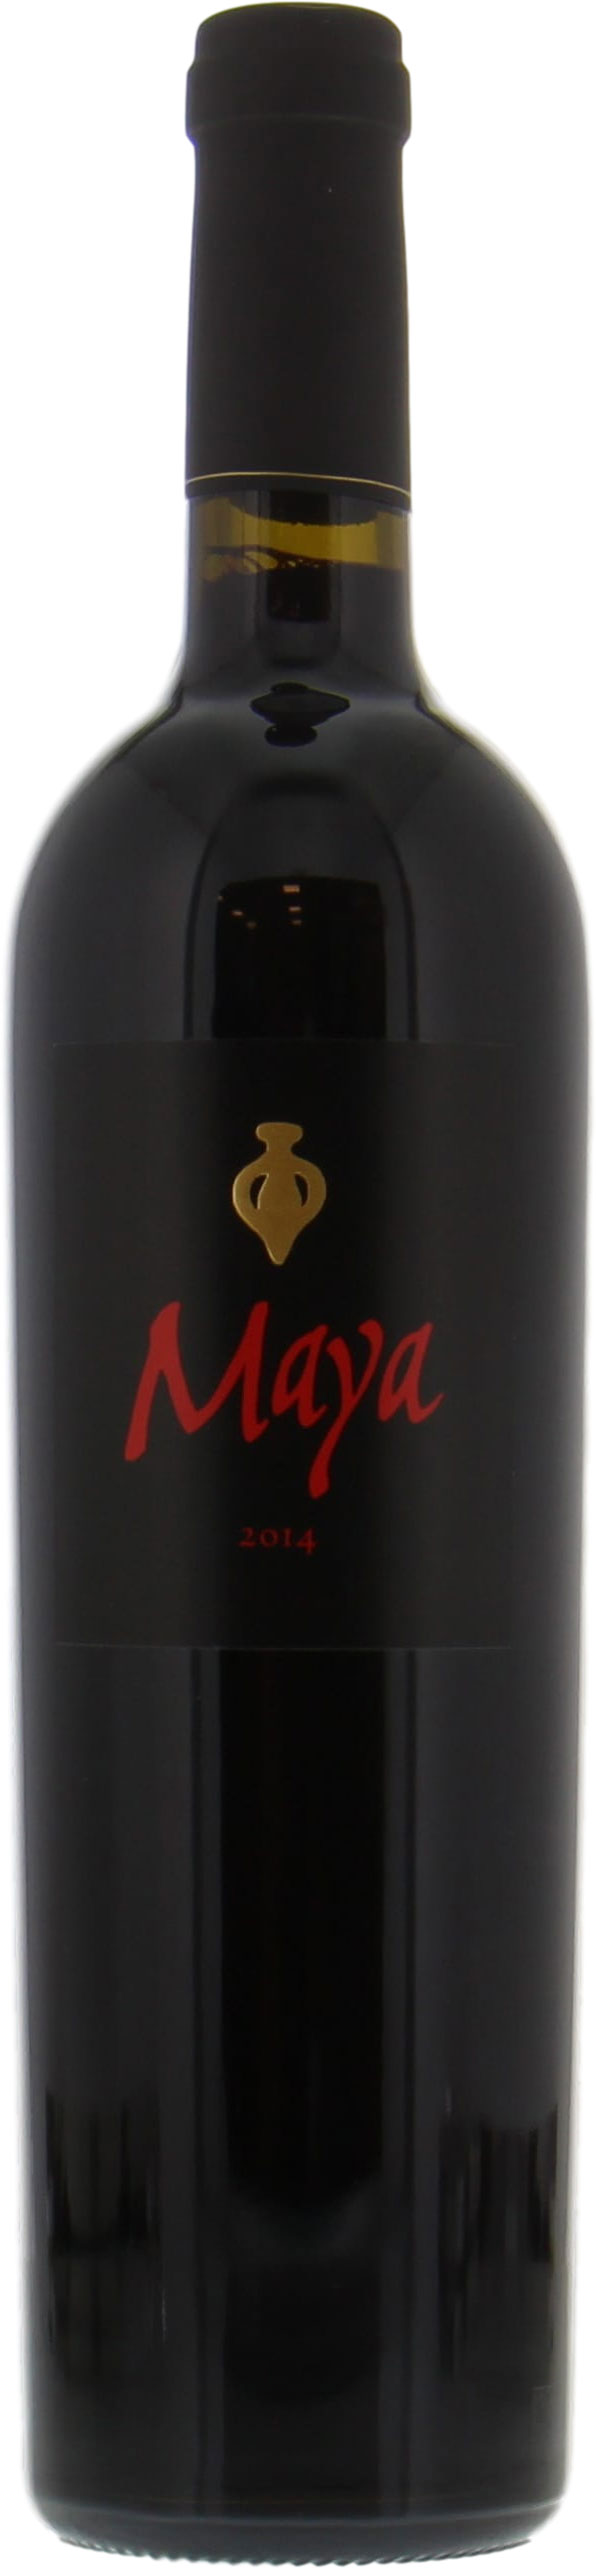 Dalla Valle - Maya Proprietary Red Wine 2014 Perfect